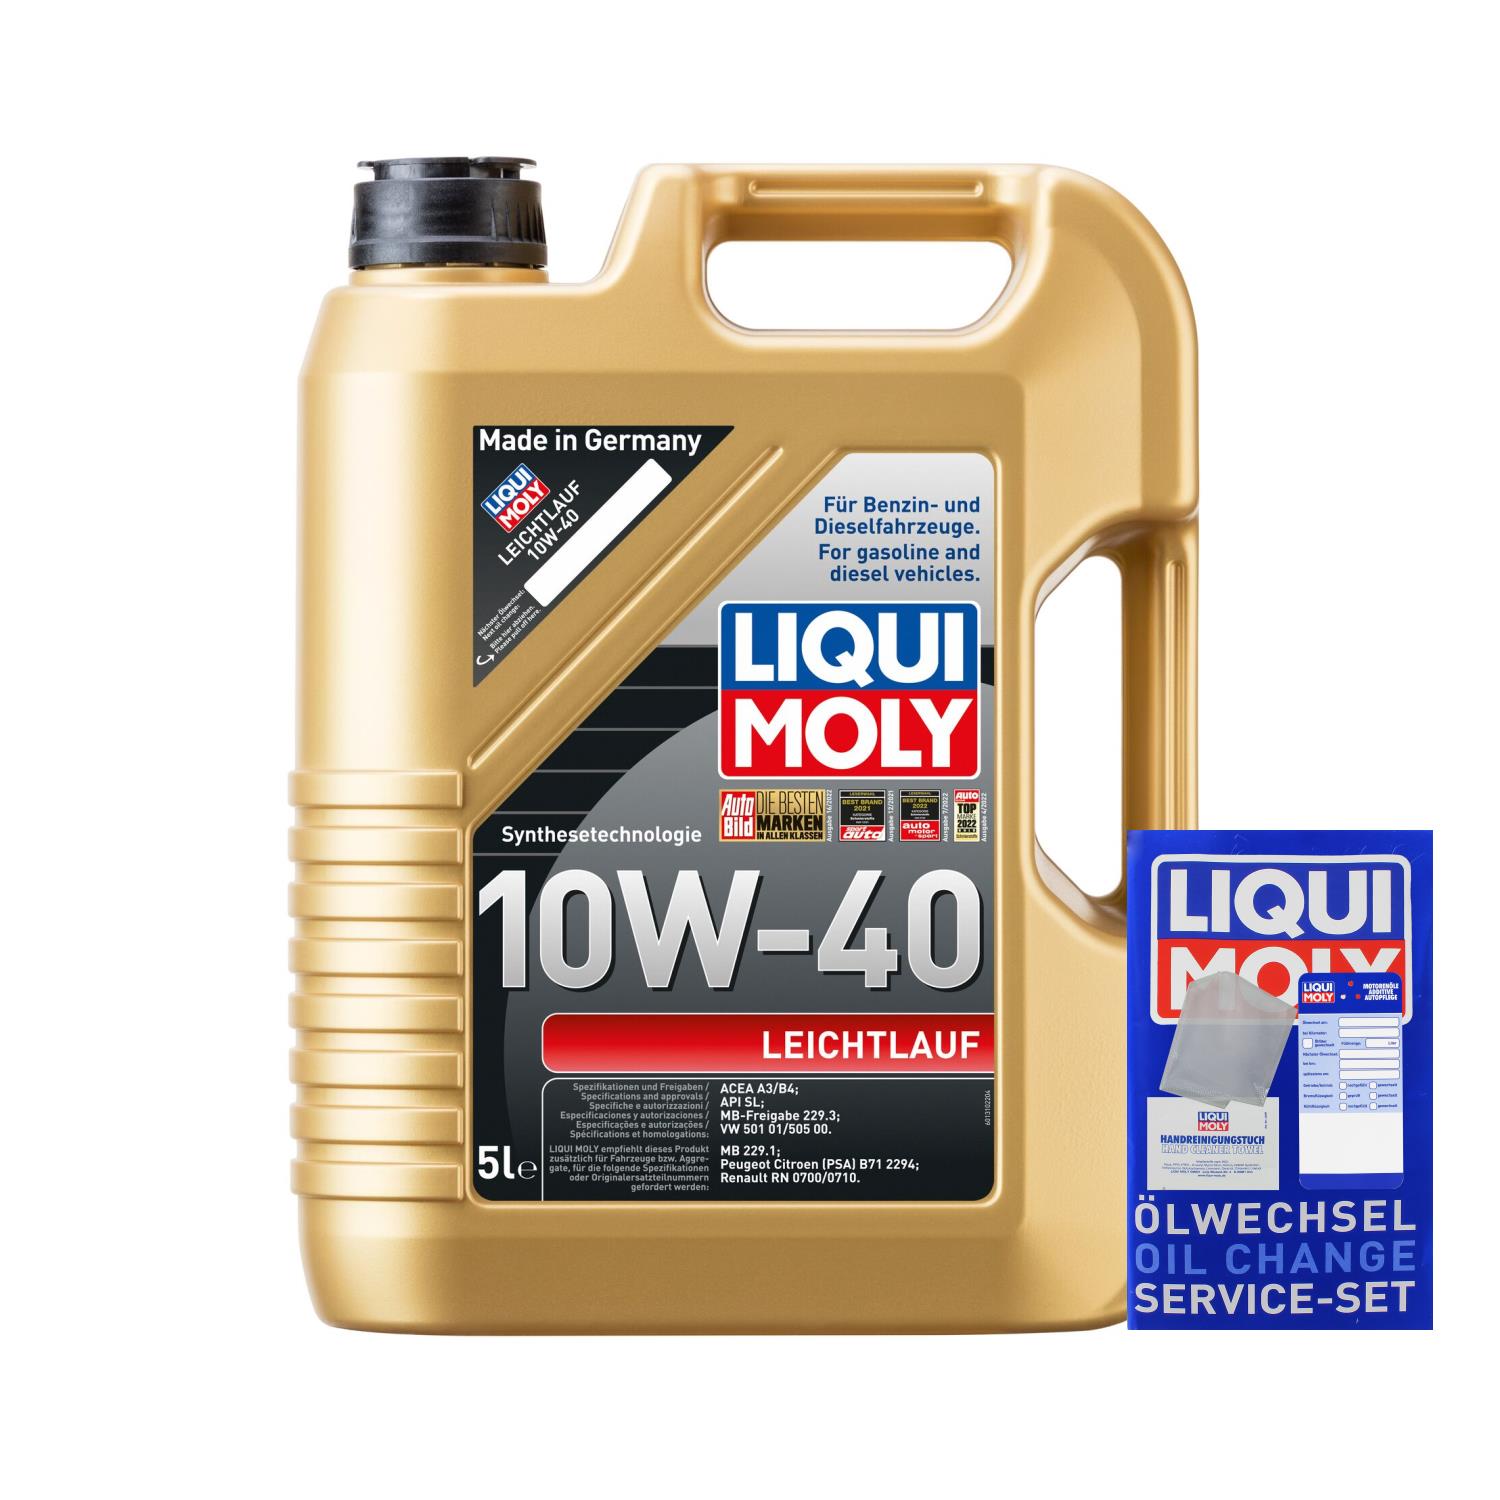 5 Liter  Liqui Moly Leichtlauf 10W-40 Öl Motoröl Engine Oil Motorenöl